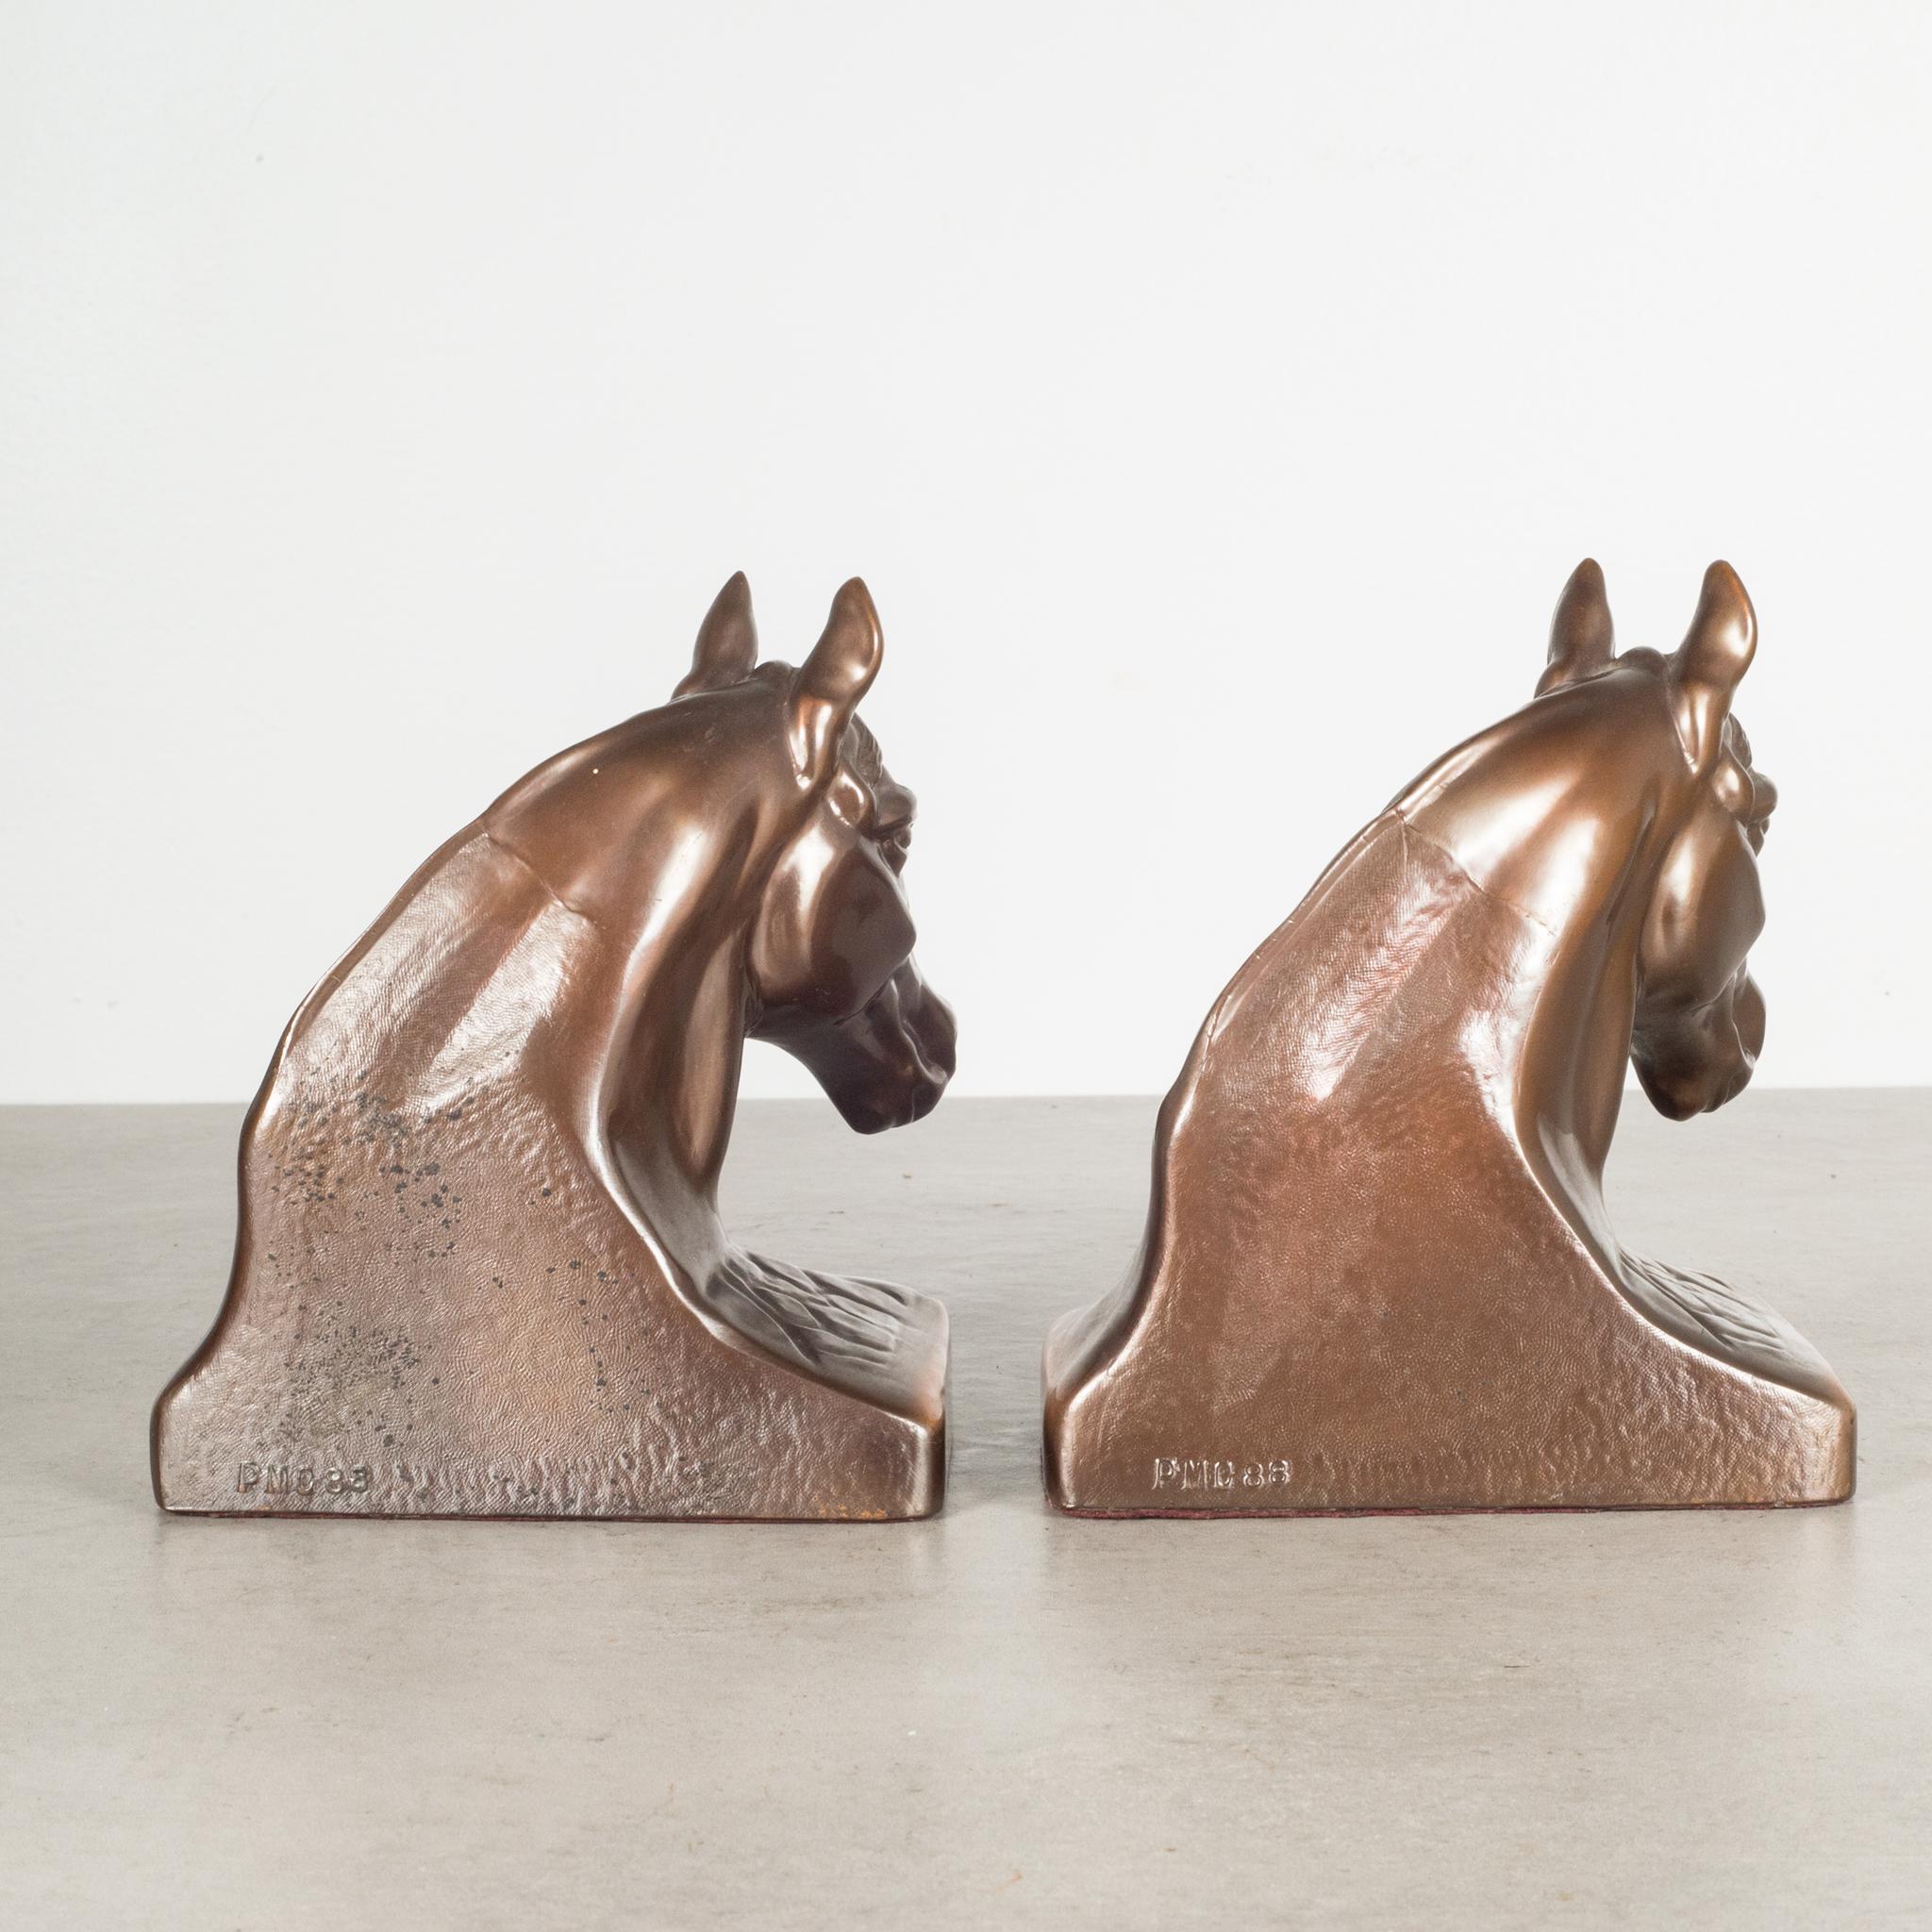 American Bronze-Plated Horse Head Bookends, circa 1940s